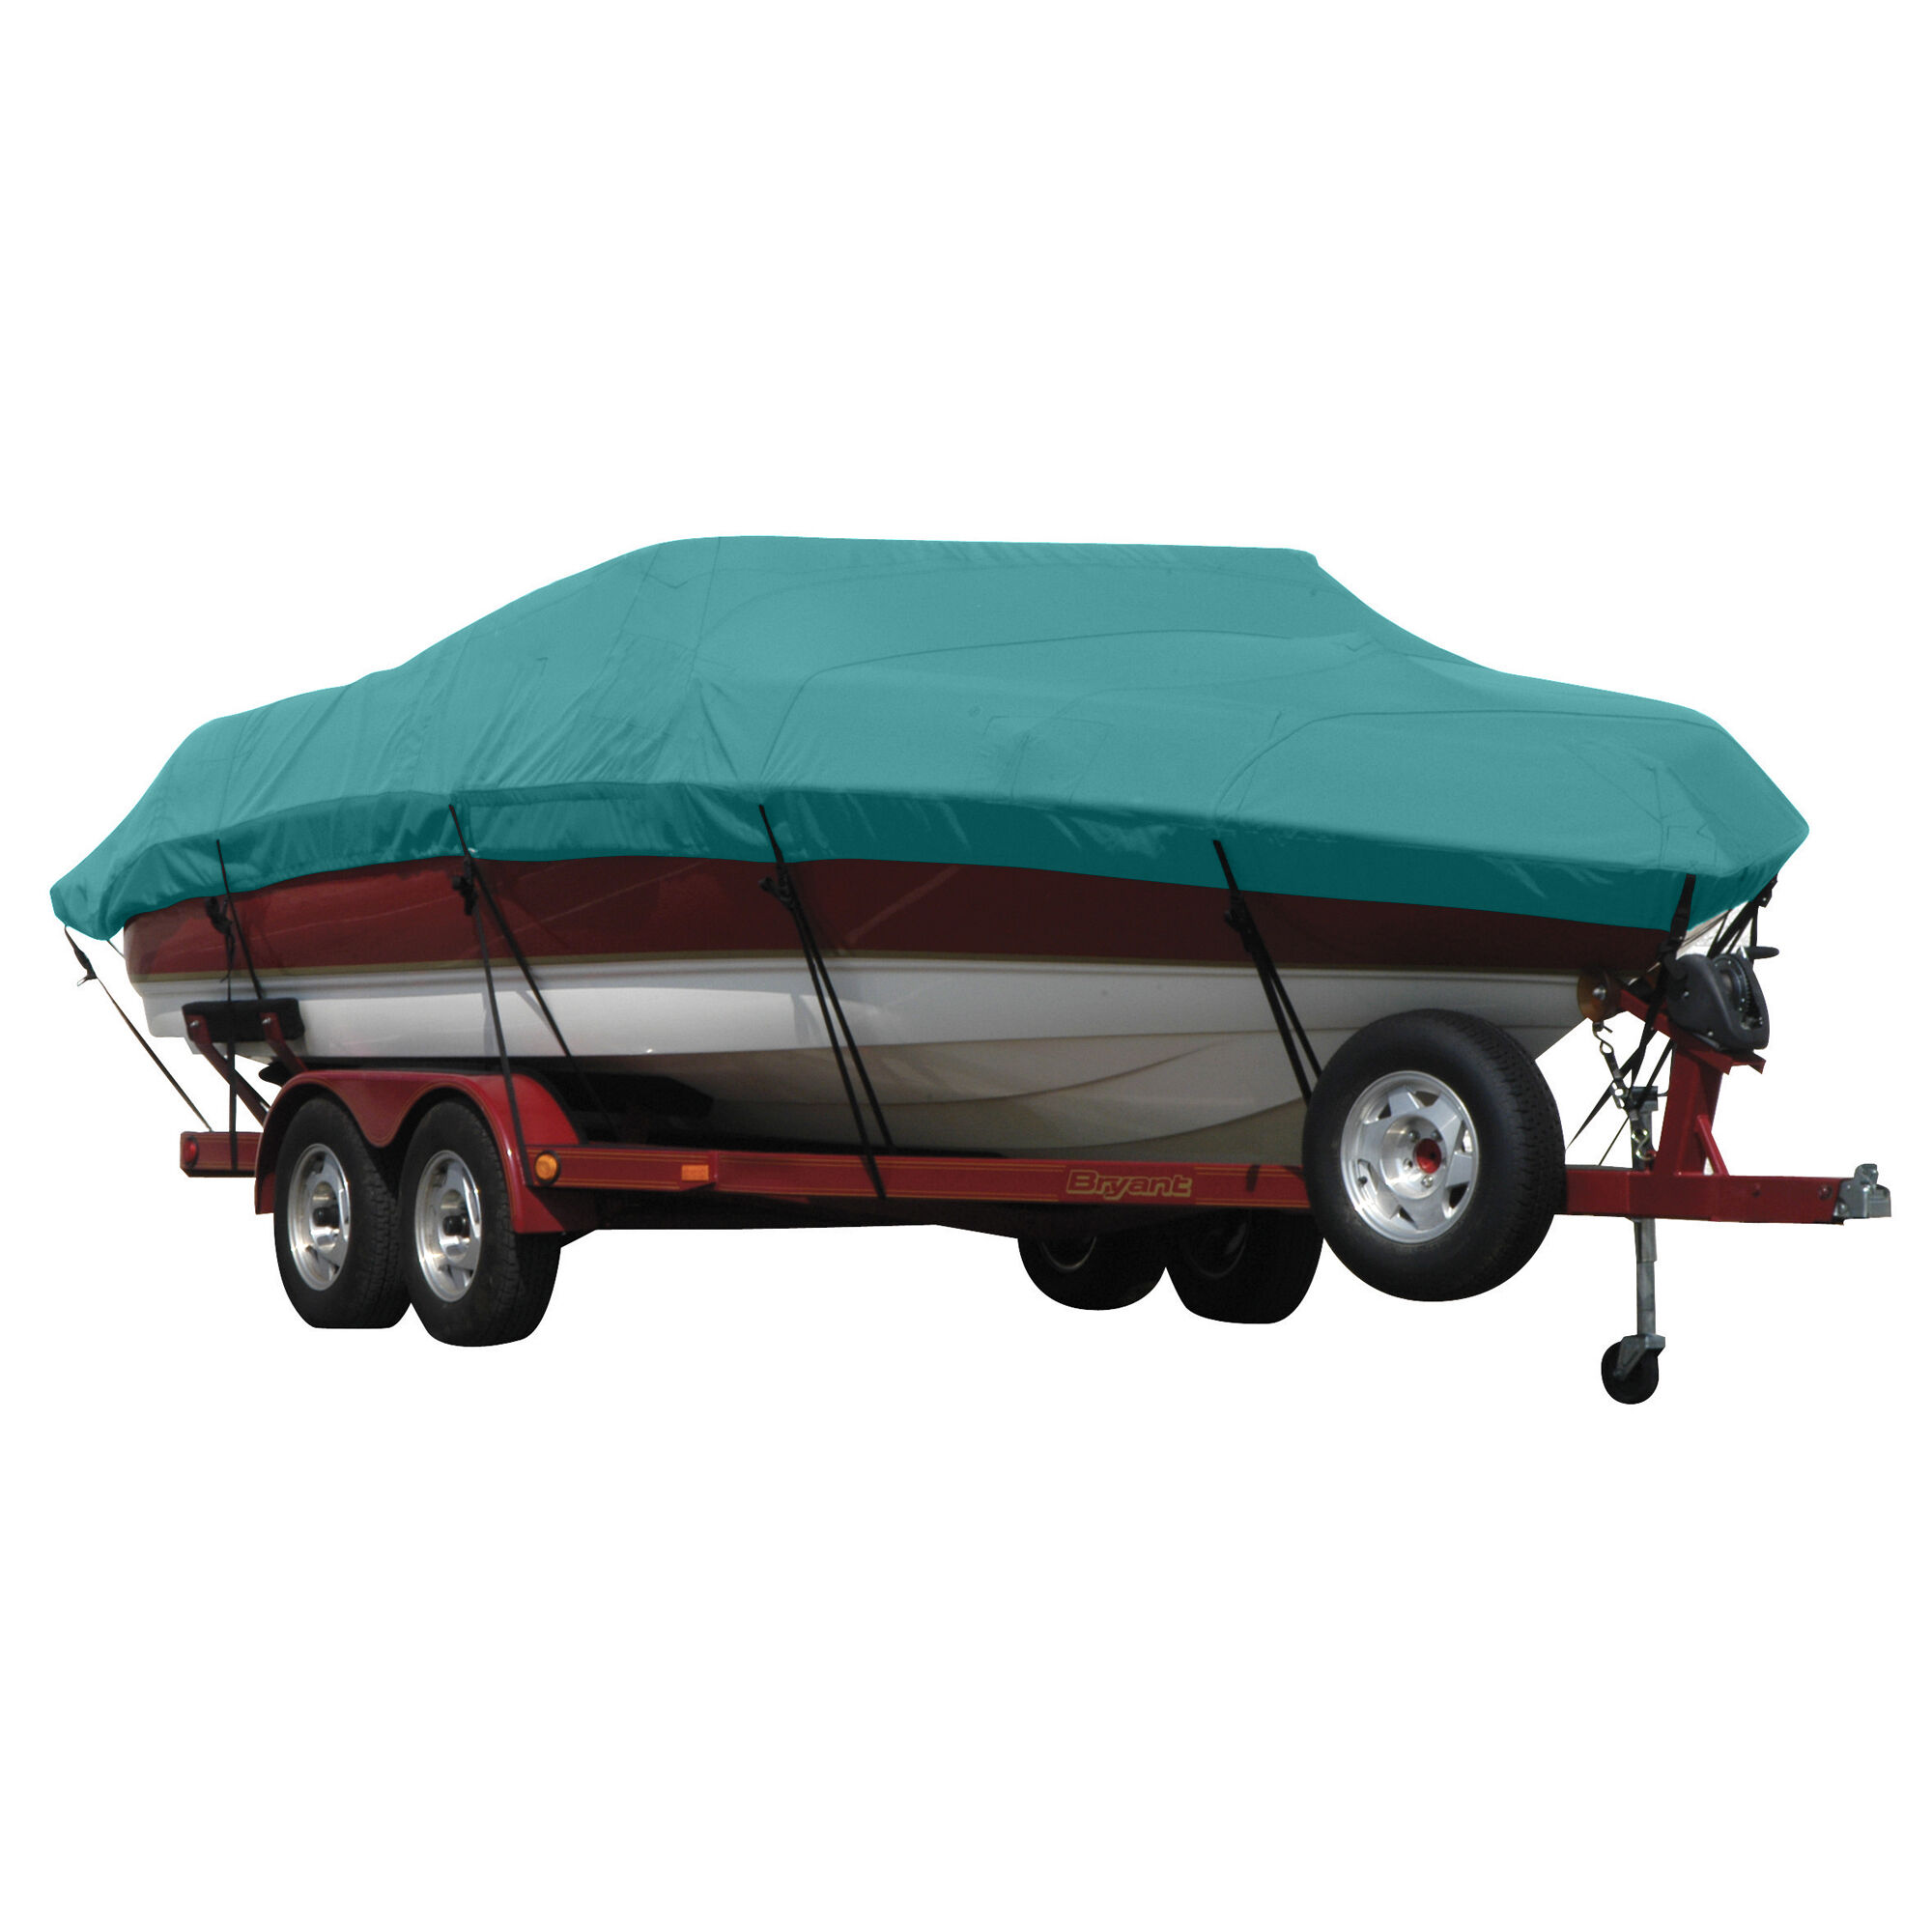 Covermate Exact Fit Sunbrella Boat Cover for Bayliner Classic 2452 Cd Classic 2452 Cd Hard Top I/O. Aqua in Aqua Blue